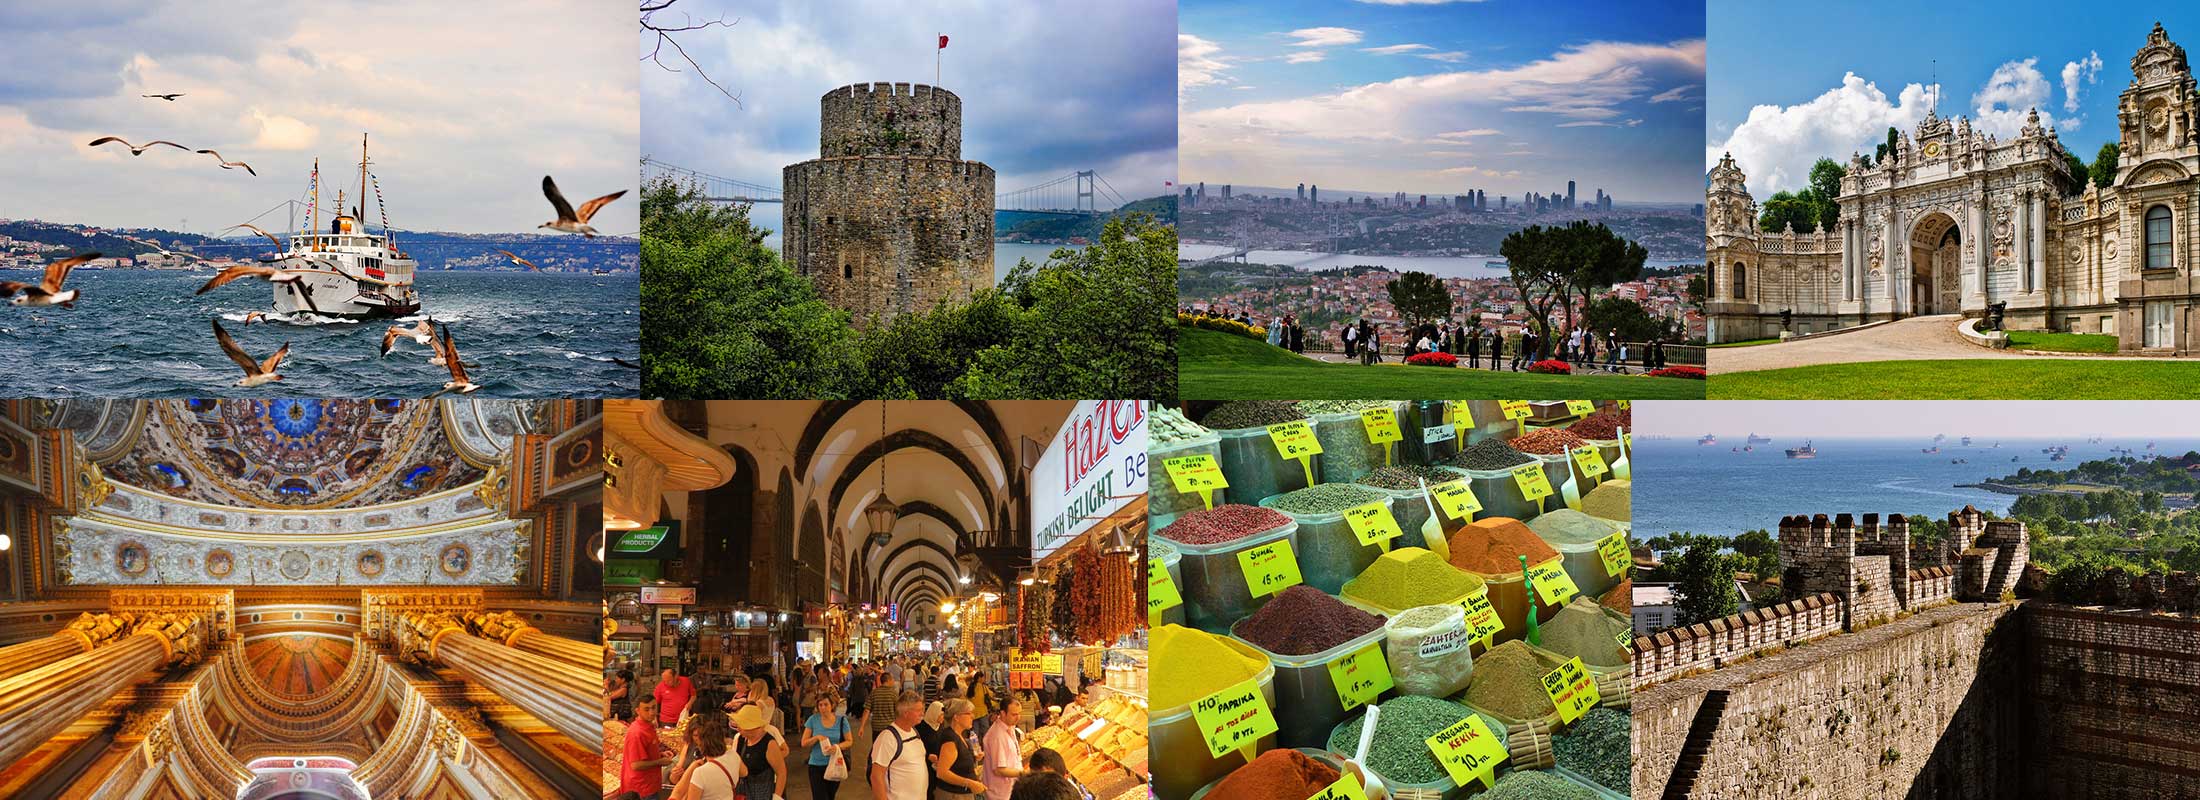 bosphorus-cruise-spice-bazaar-dolmabahce-palace-camlica-hill-tour